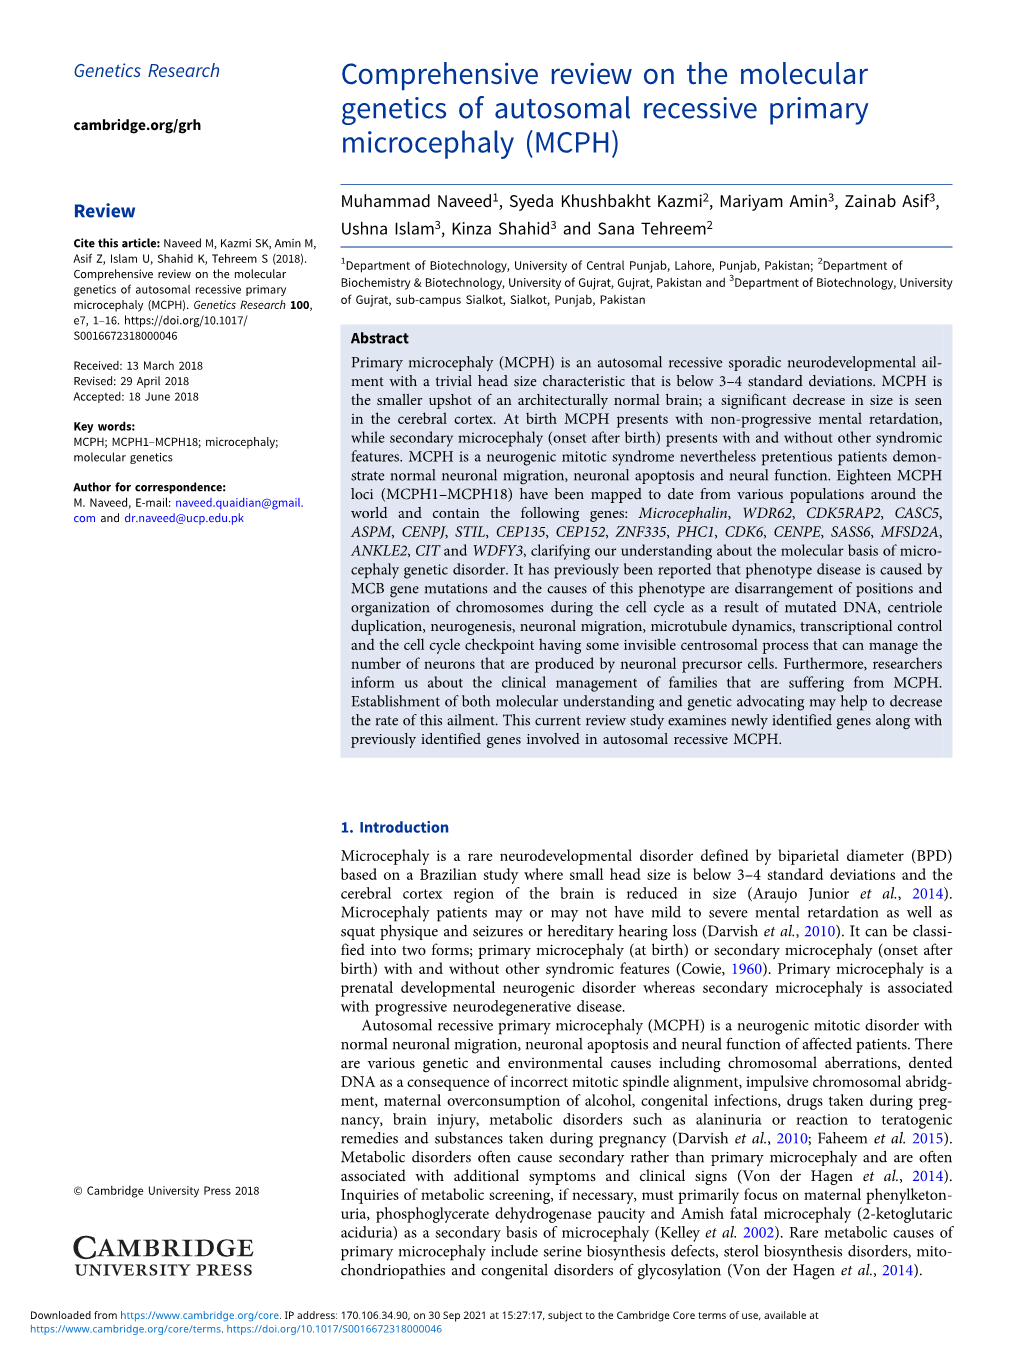 Comprehensive Review on the Molecular Genetics of Autosomal Recessive Primary Cambridge.Org/Grh Microcephaly (MCPH)